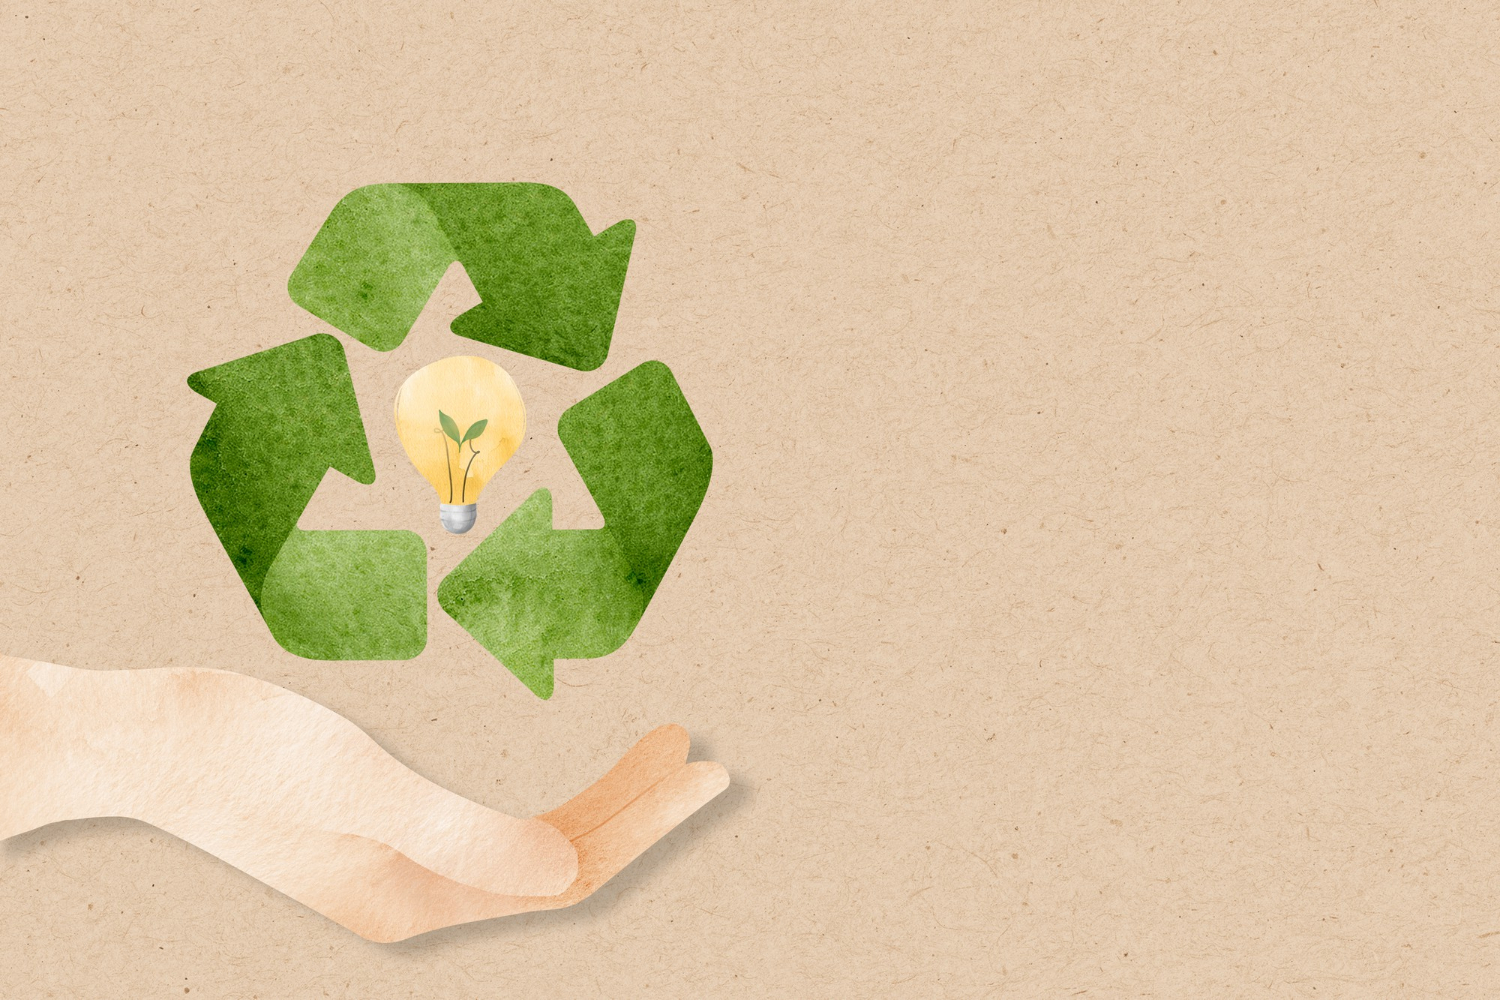 Recykling i ekologia